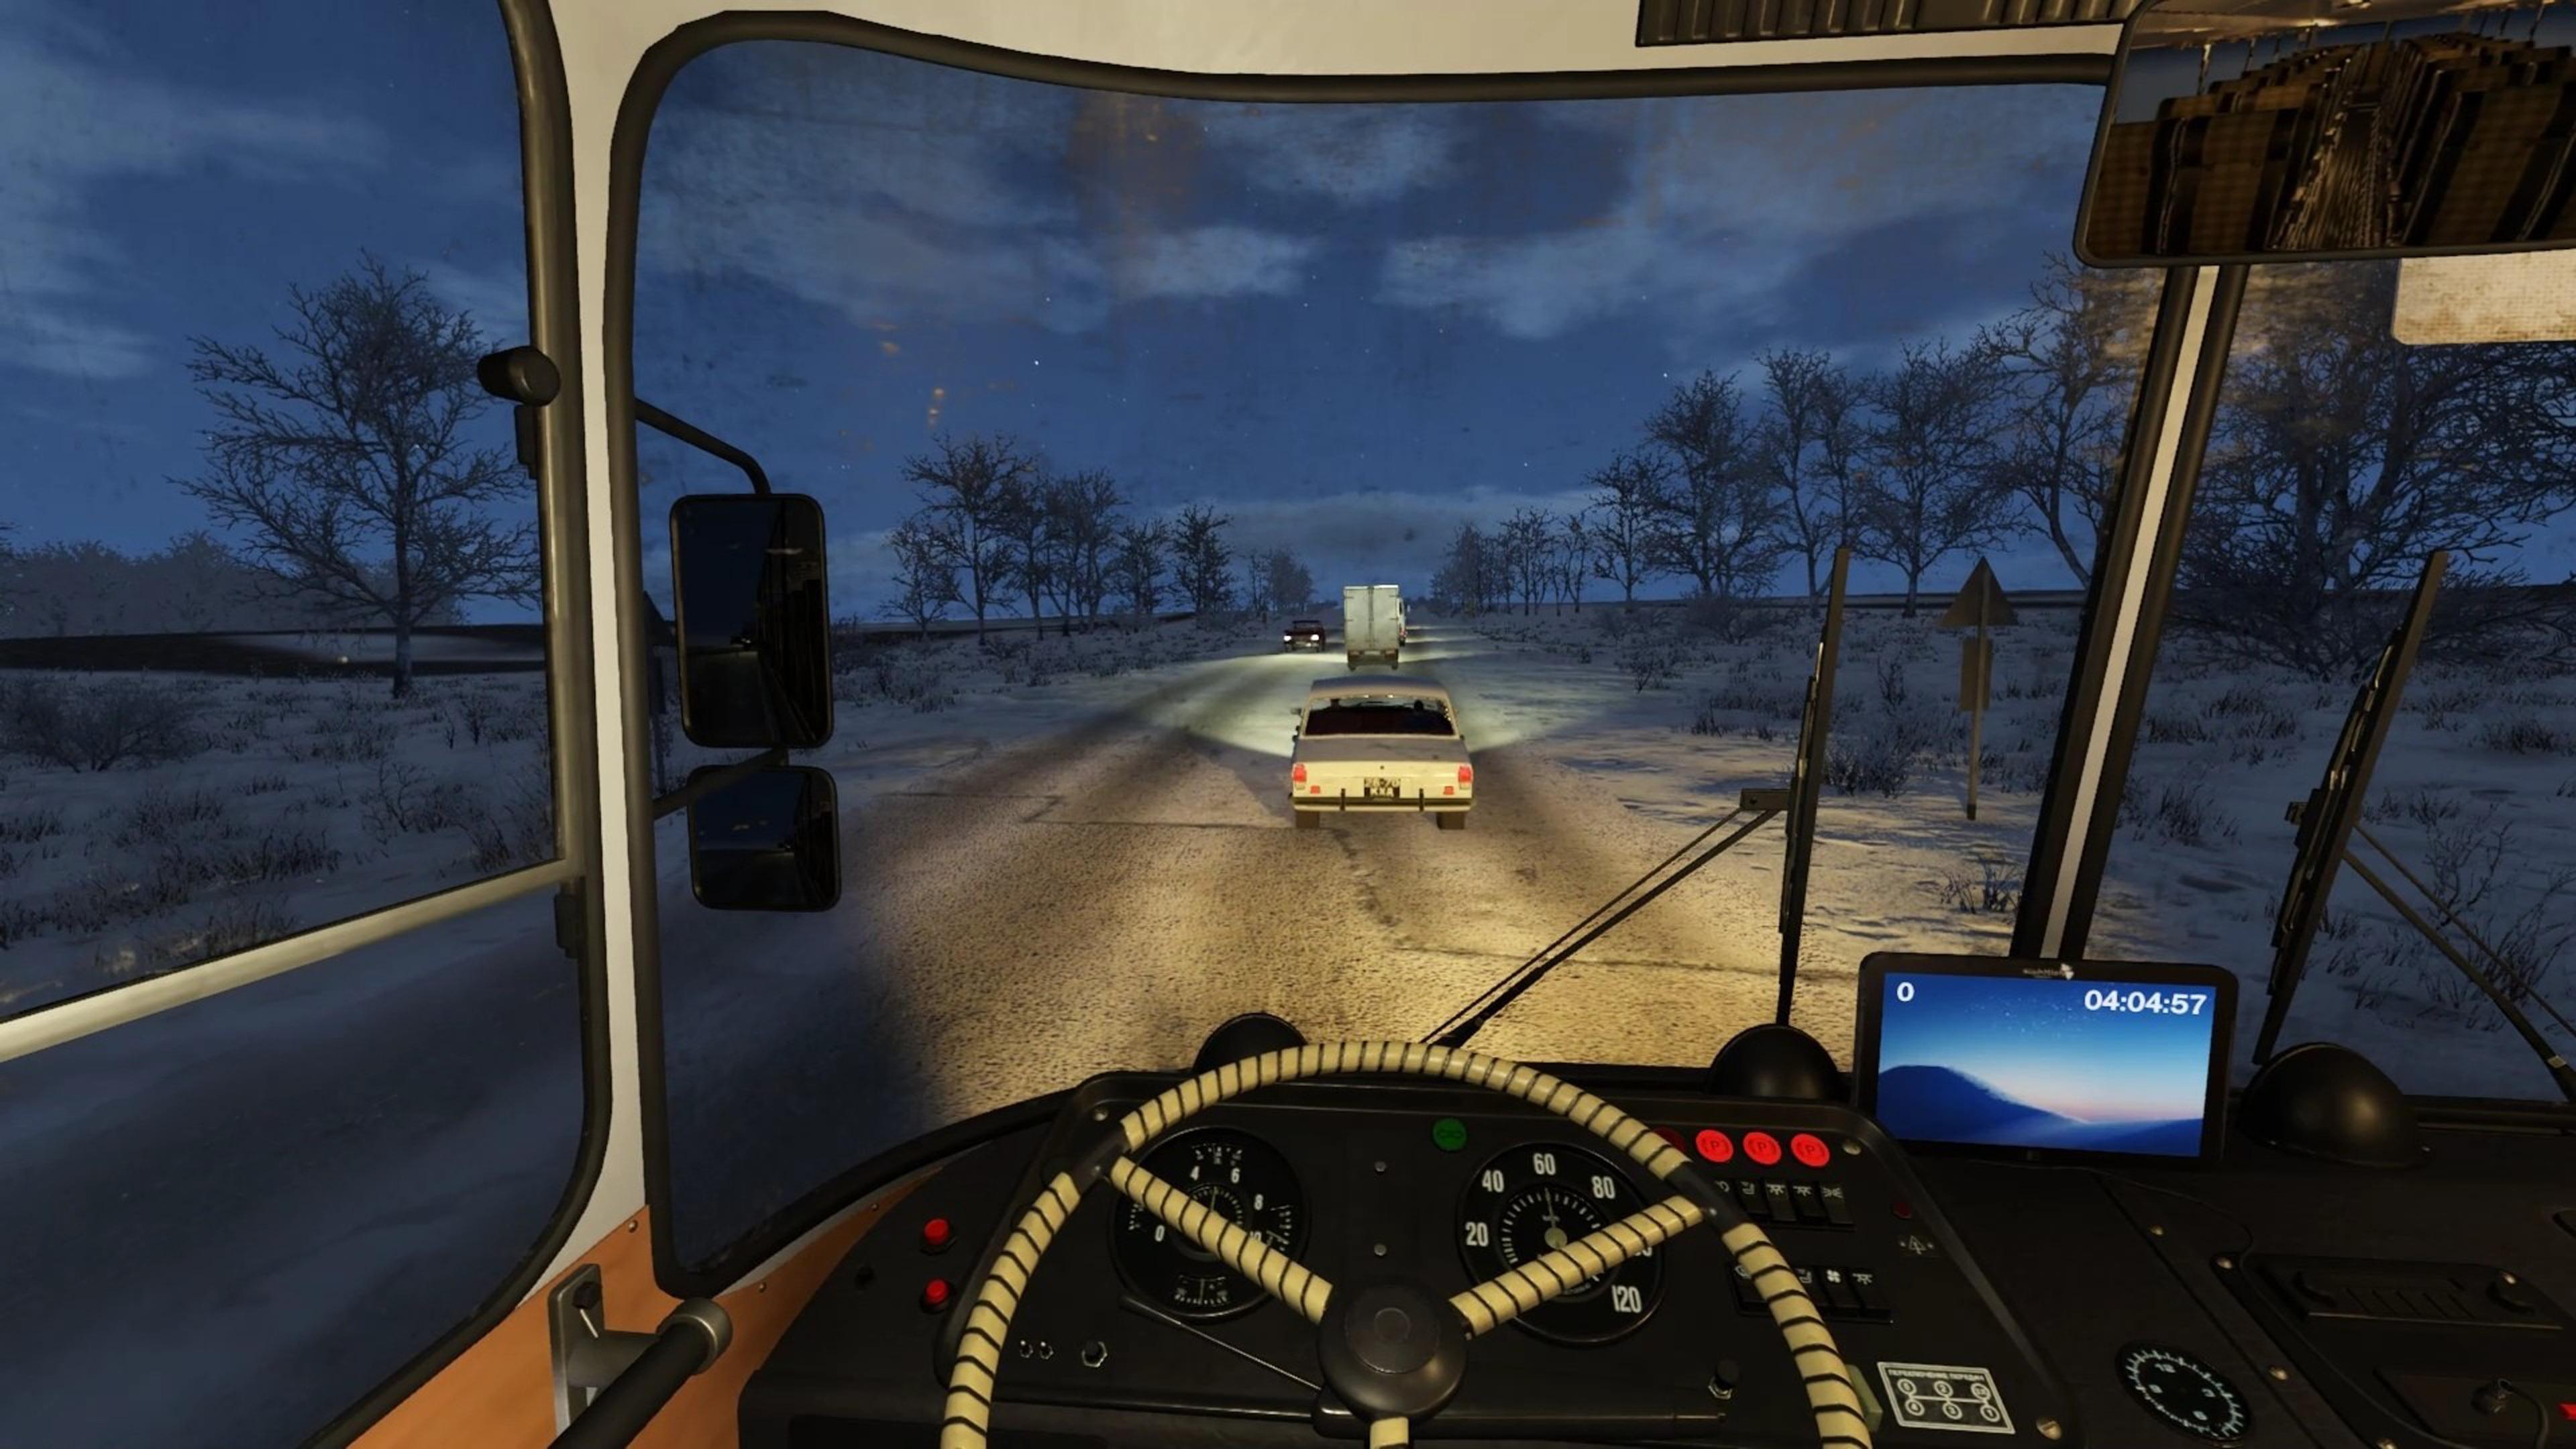 80% Bus Driver Simulator on